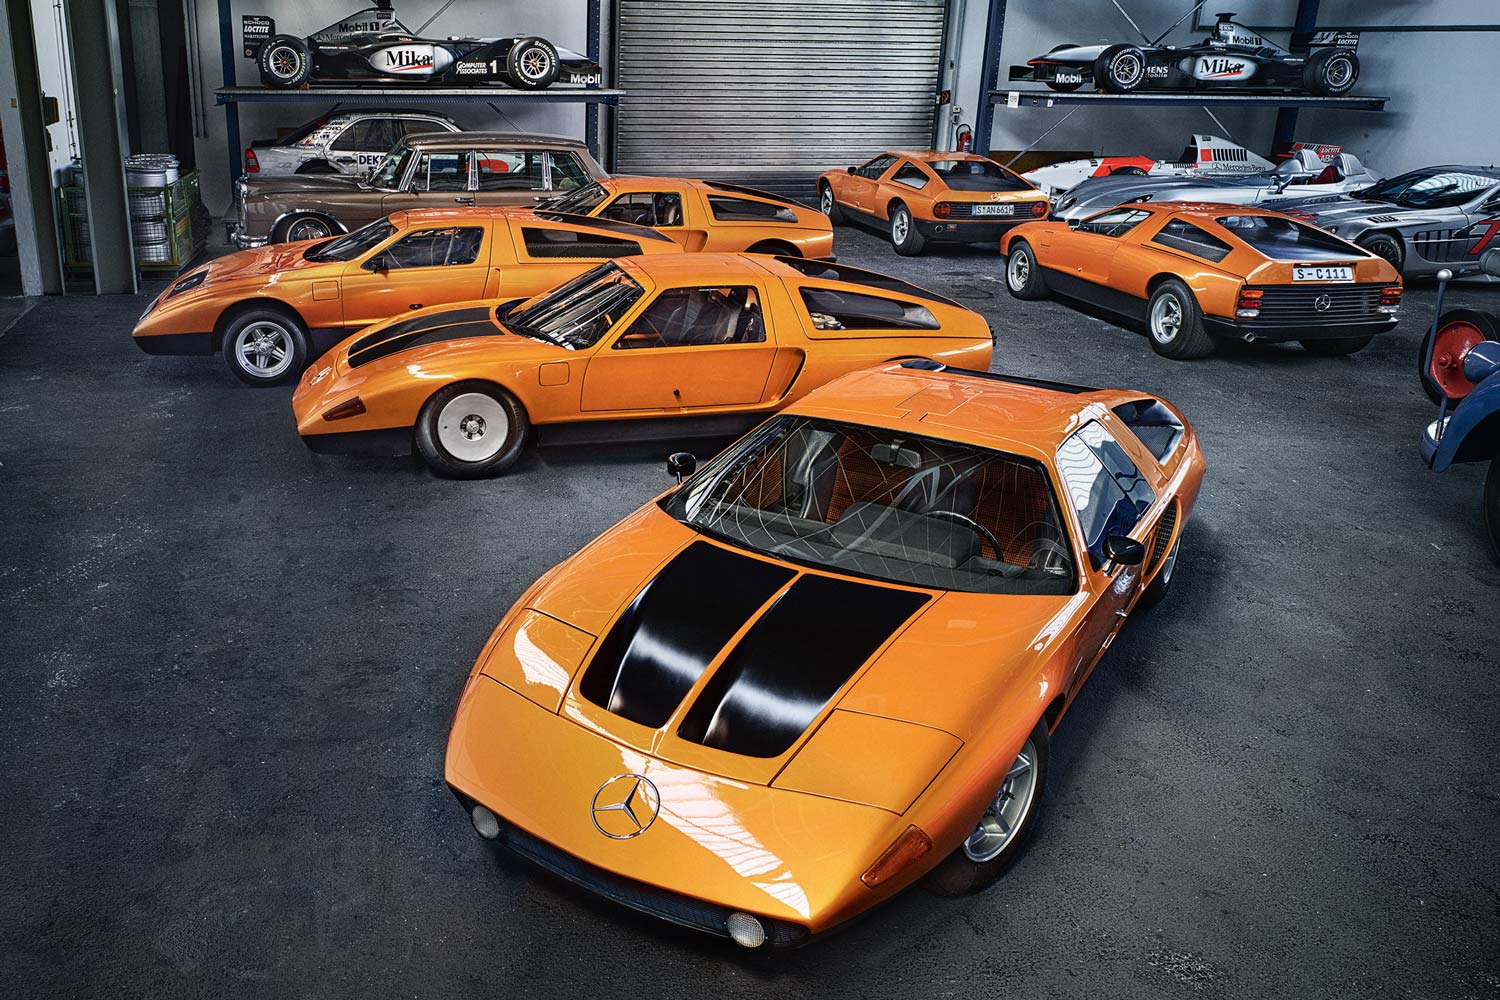 Several orange Mercedes-Benz sports cars